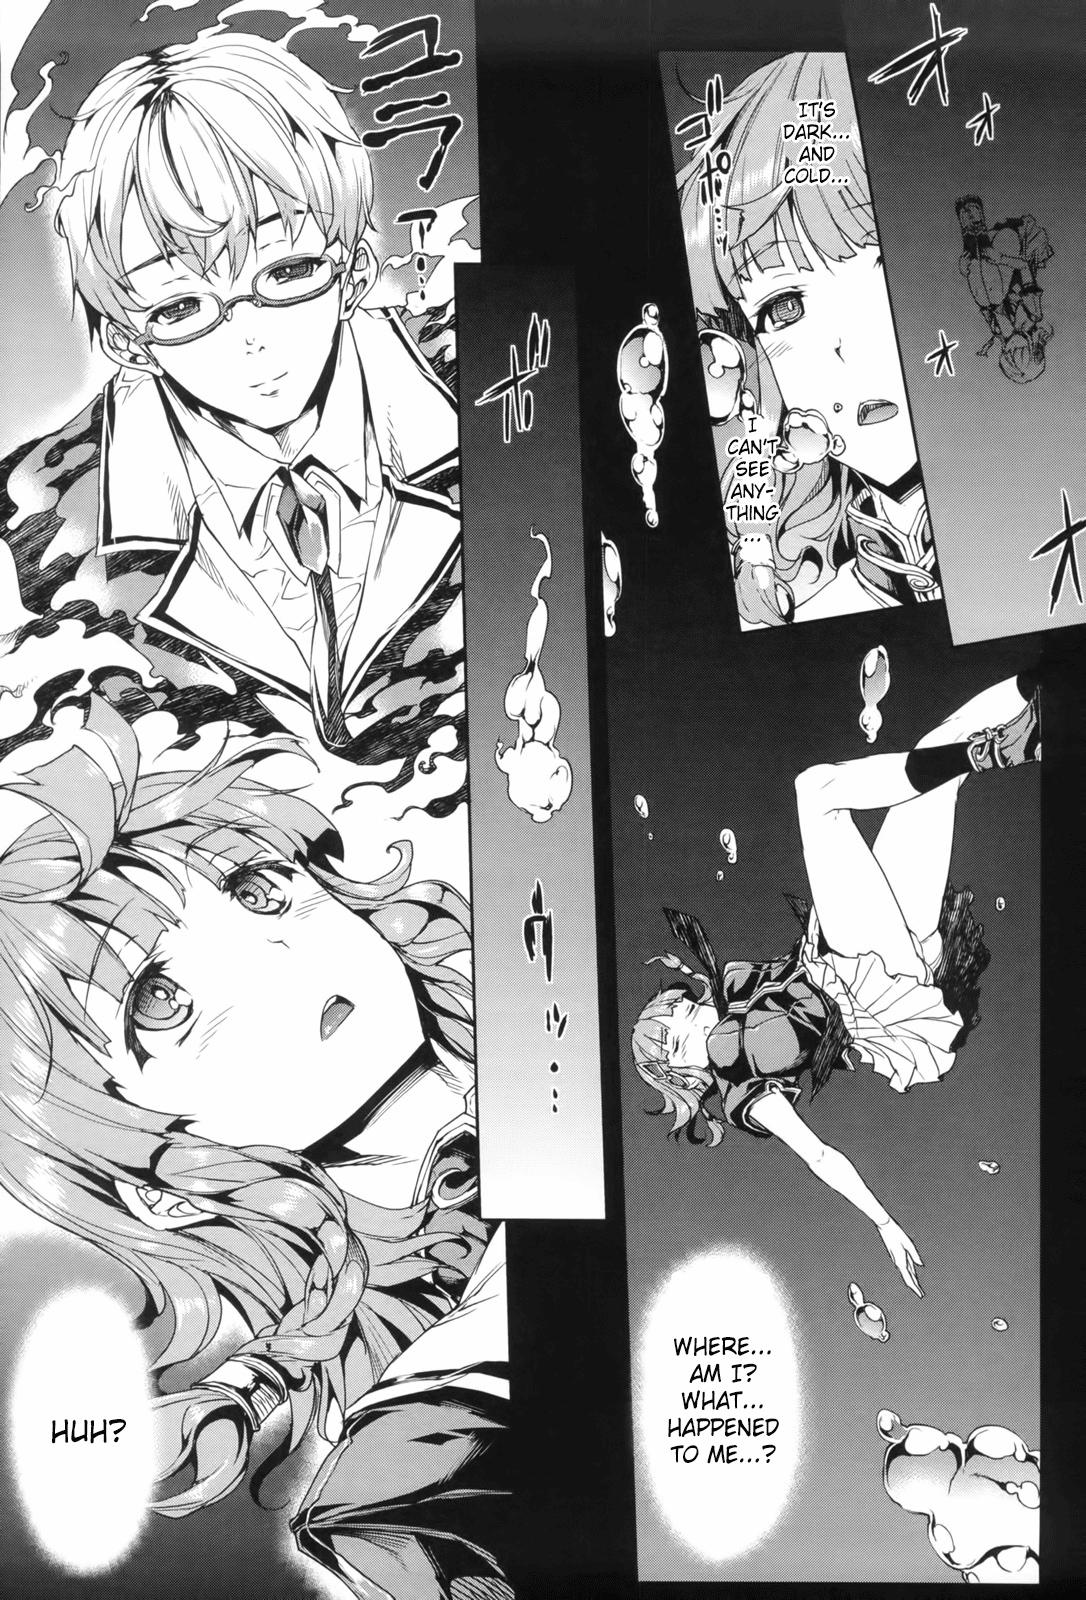 [ERECT TOUCH (Erect Sawaru)] Shinkyoku no Grimoire -PANDRA saga 2nd story- Ch 01-12 + Side Story x 3 [English] [SaHa] 86